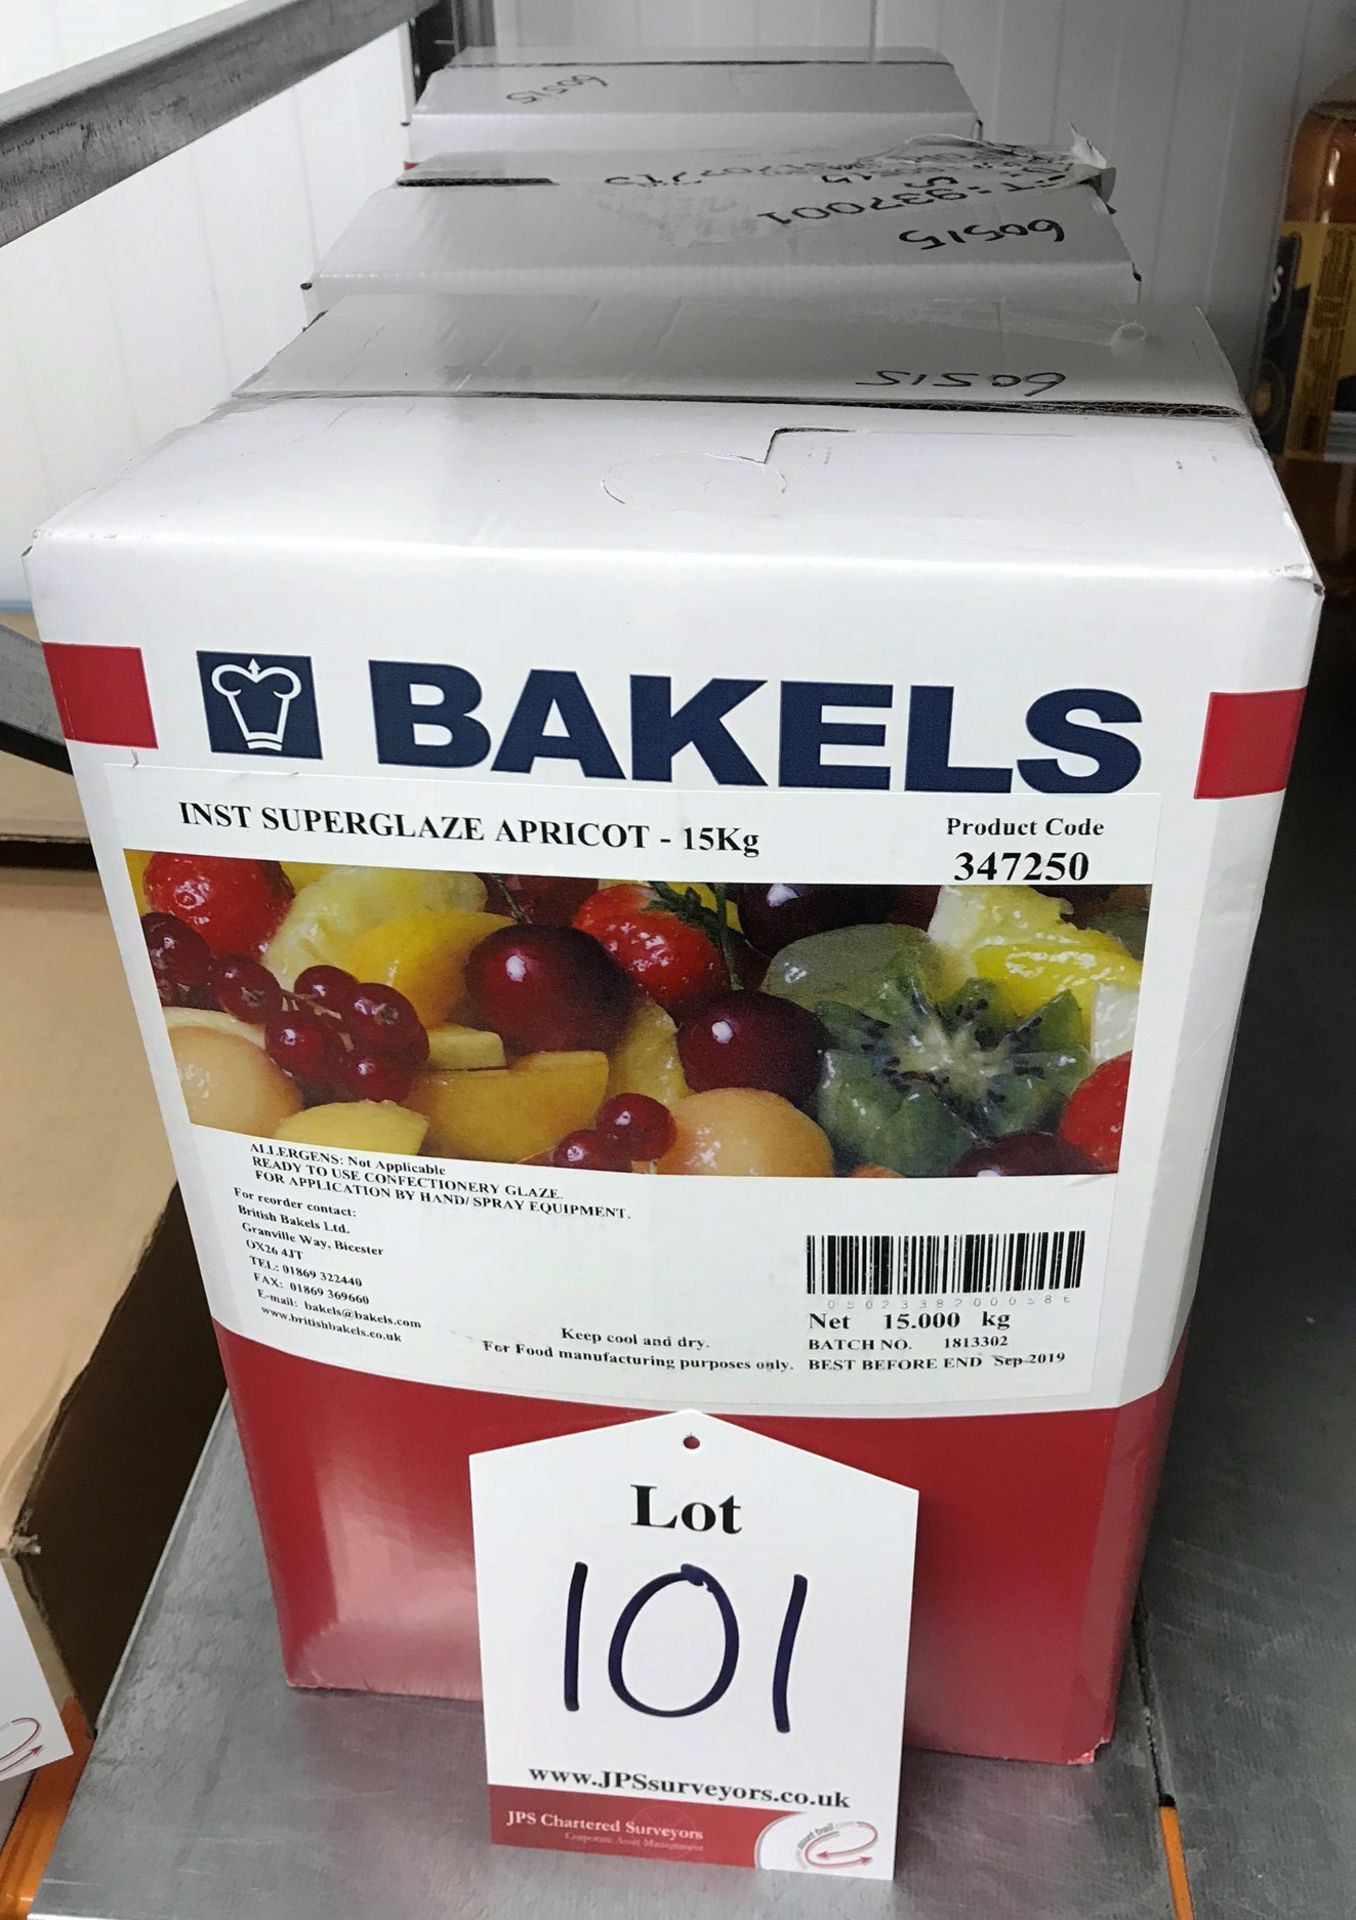 3 x Bakels Inst Superglaze Apricot - 15kg - Product Code: 347250 - 07/2019